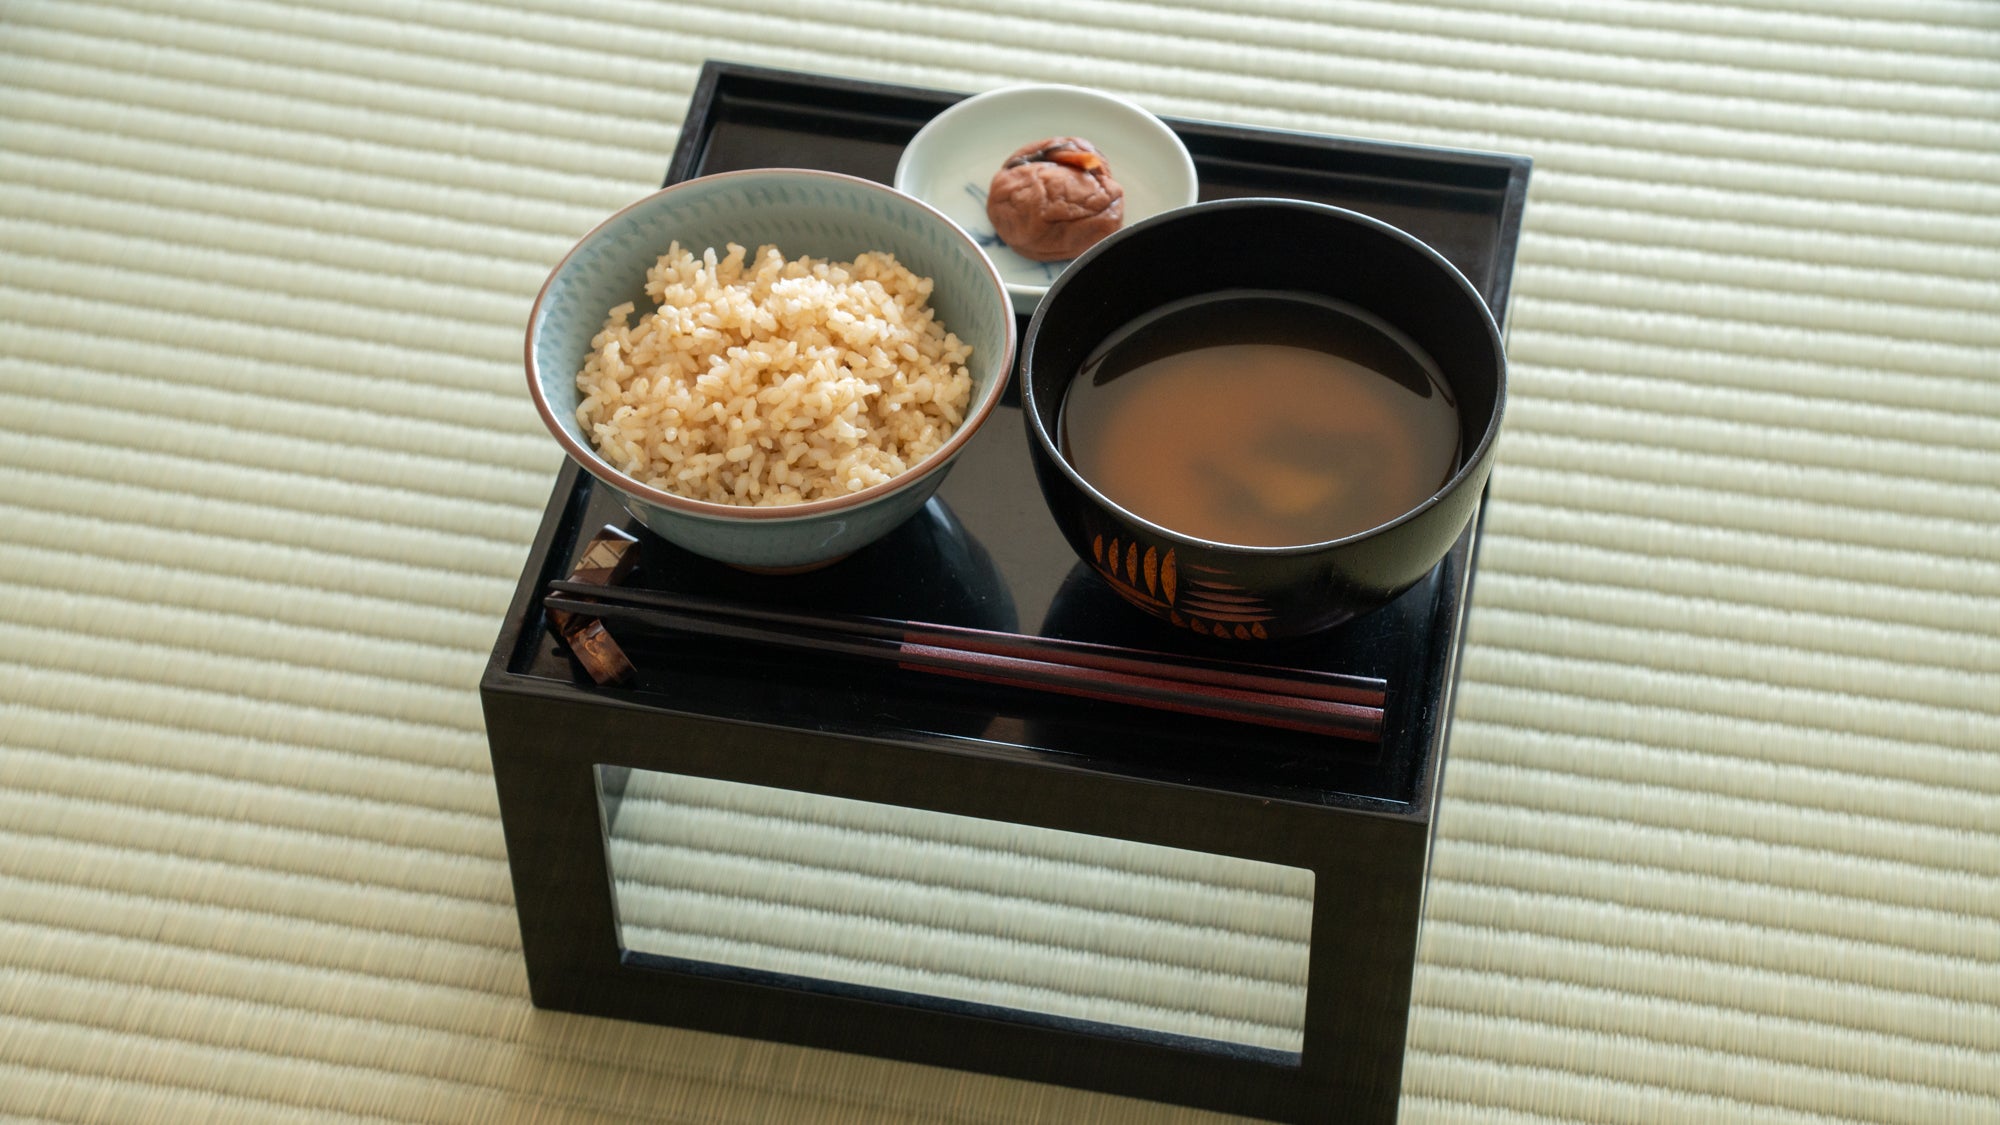 The Shogun's Table — What Did Ieyasu Eat?